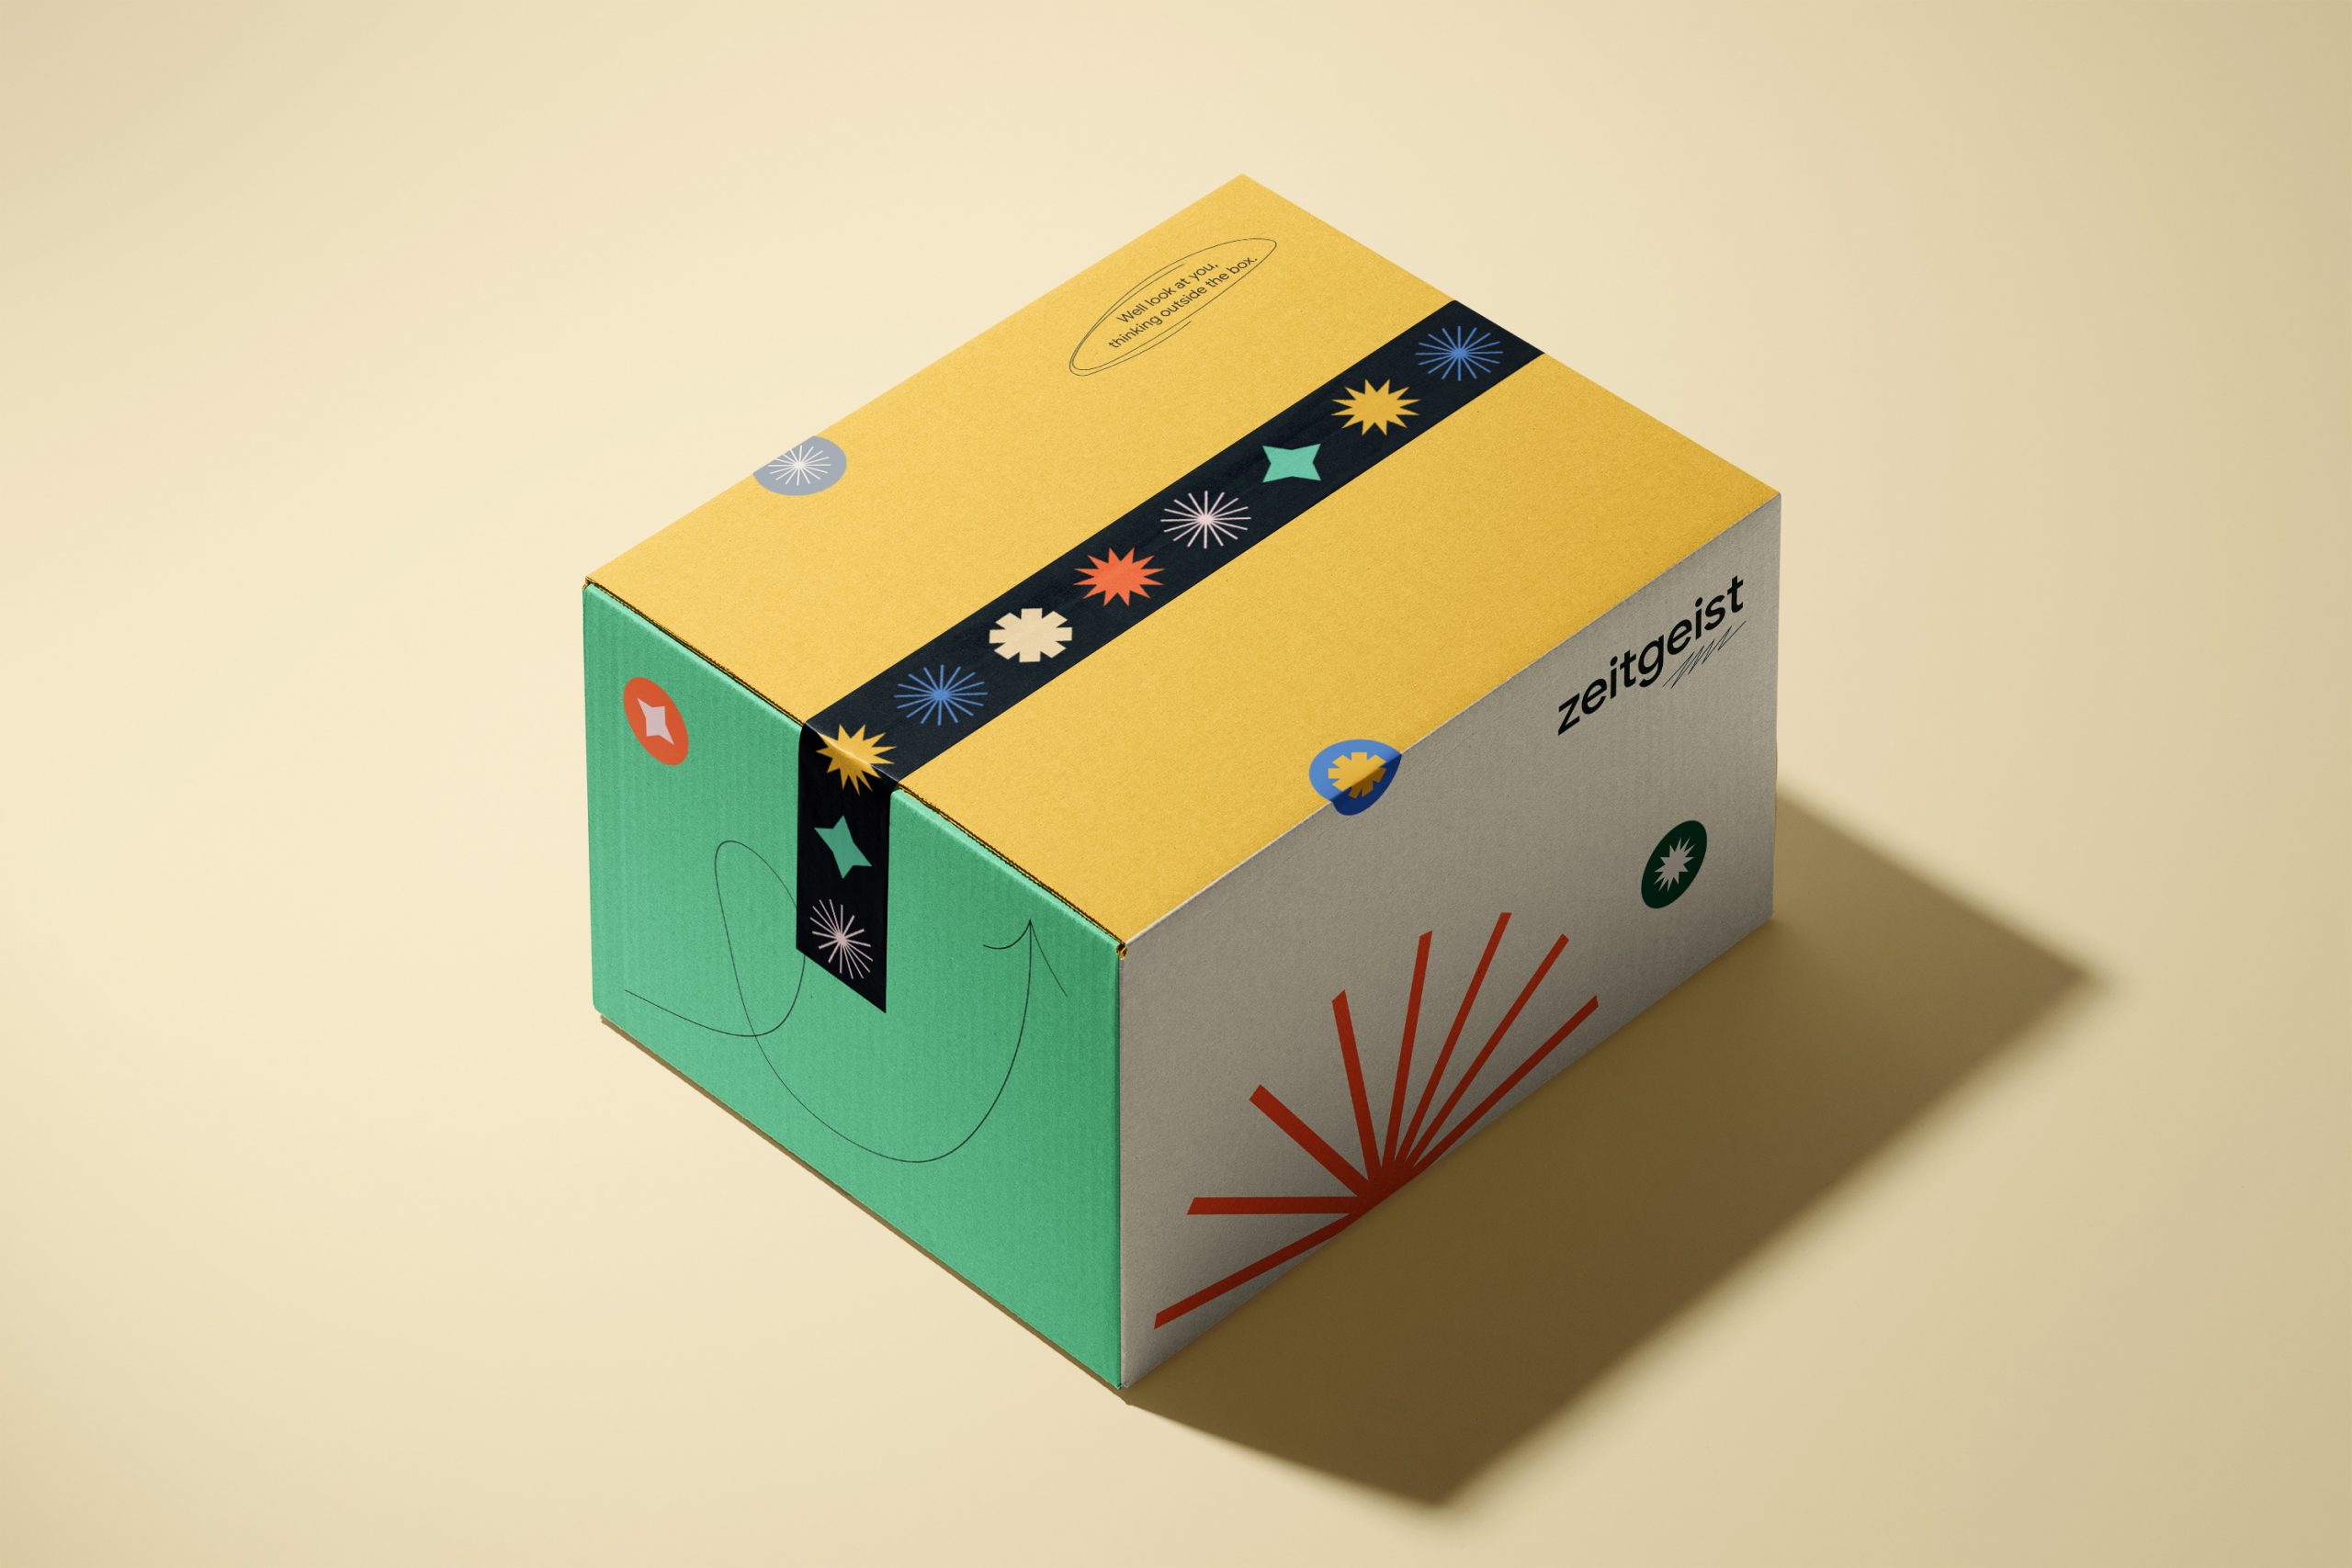 Vedros_Google_Zeitgeist_Box2-scaled-1